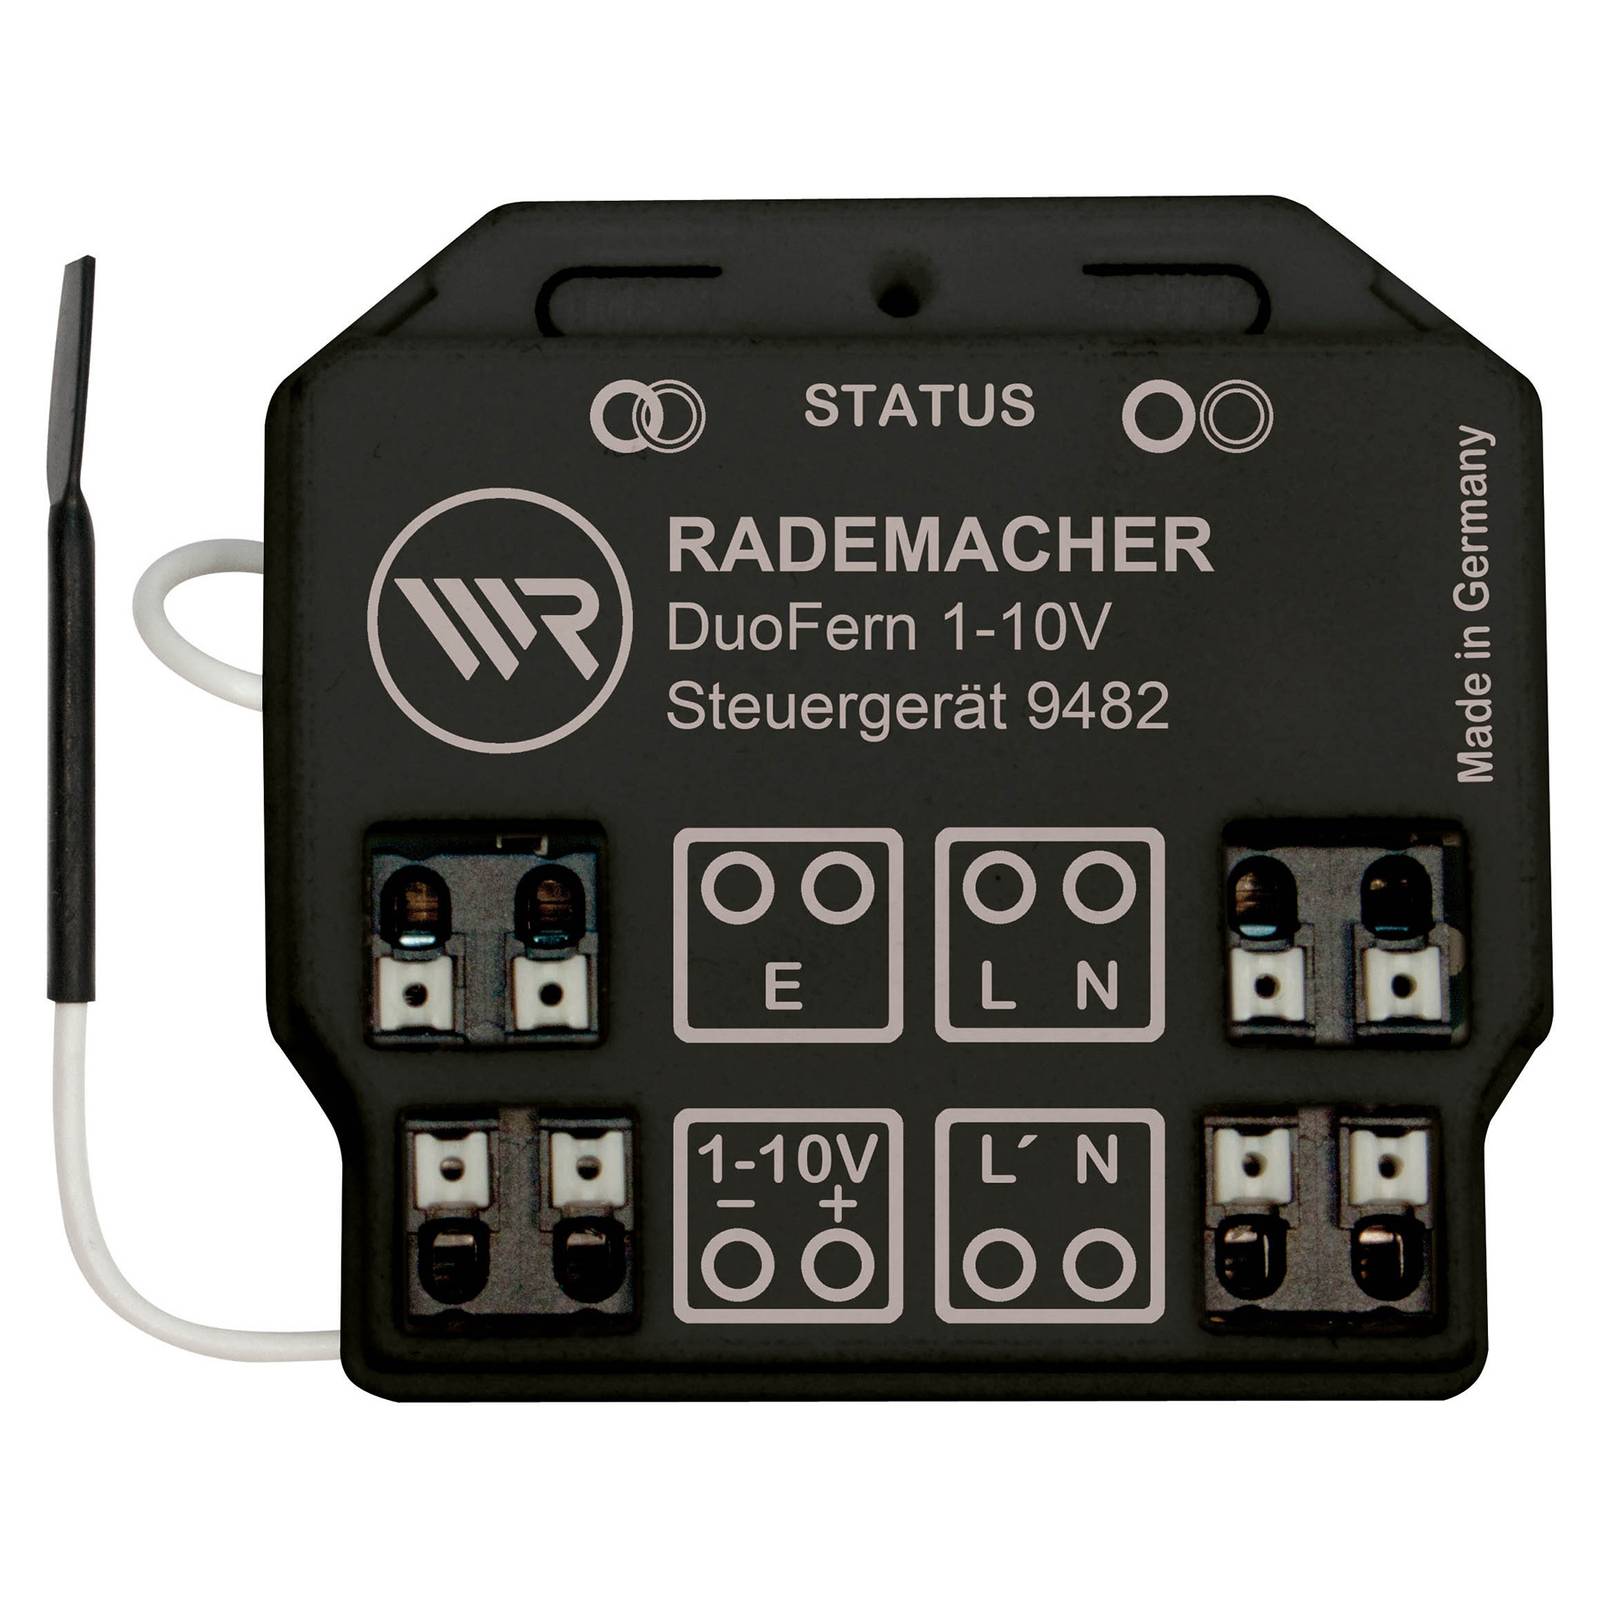 Image of Rademacher DuoFern 1-10 V commande actionneur dim 4031909020604